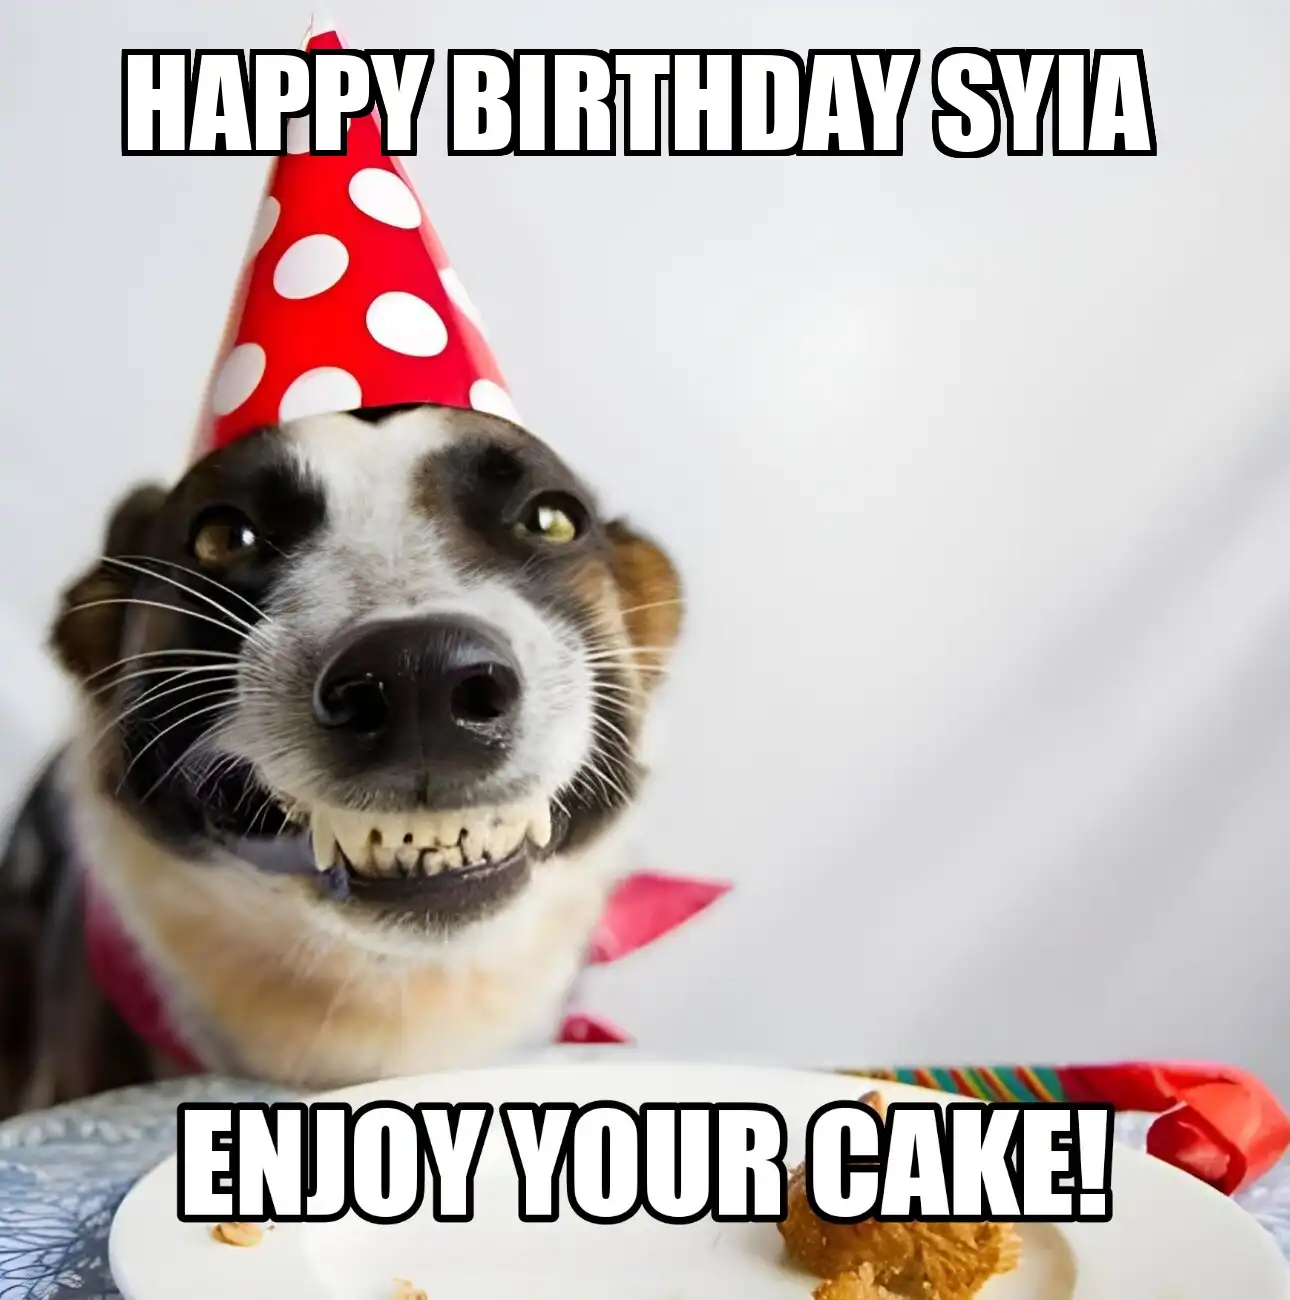 Happy Birthday Syia Enjoy Your Cake Dog Meme